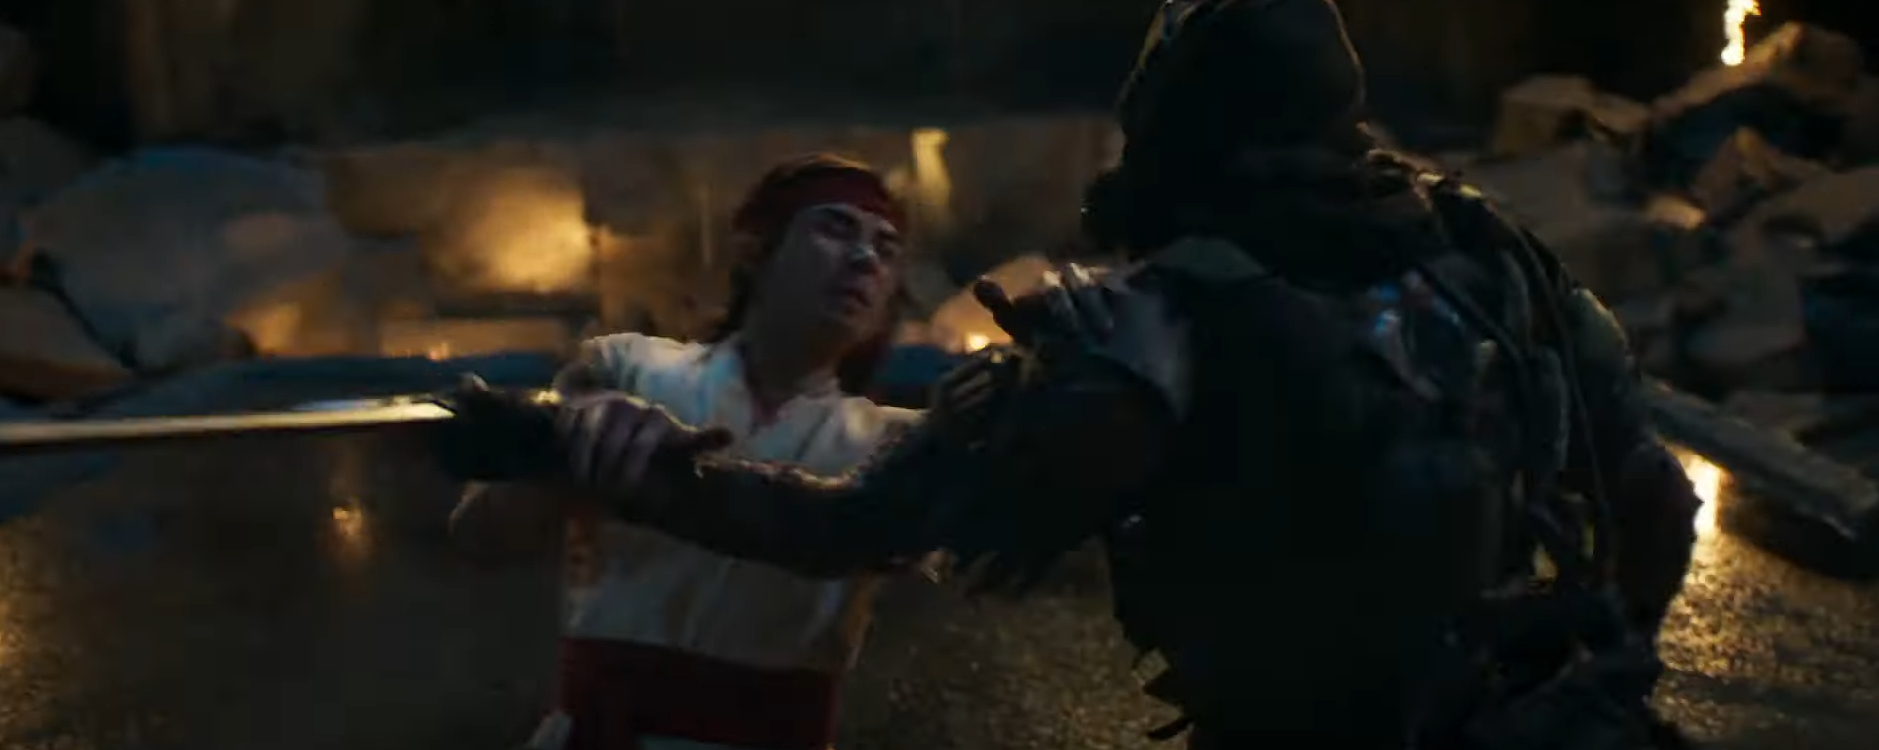 Mortal Kombat trailer screenshot: Liu Kang battles Kabal